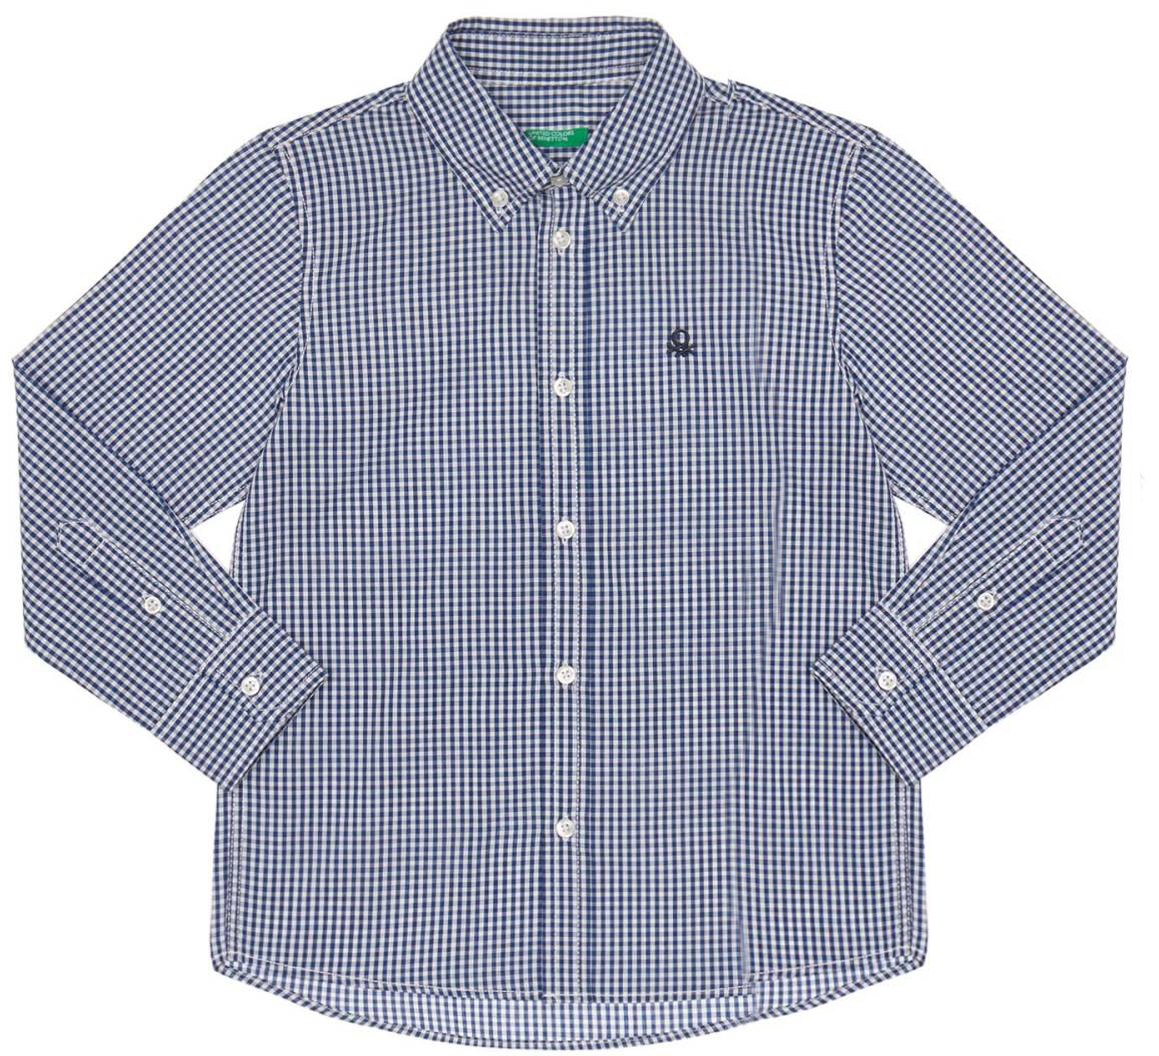 Рубашка для мальчика United Colors of Benetton, цвет: синий. 5DU65Q200_949. Размер XS (110)